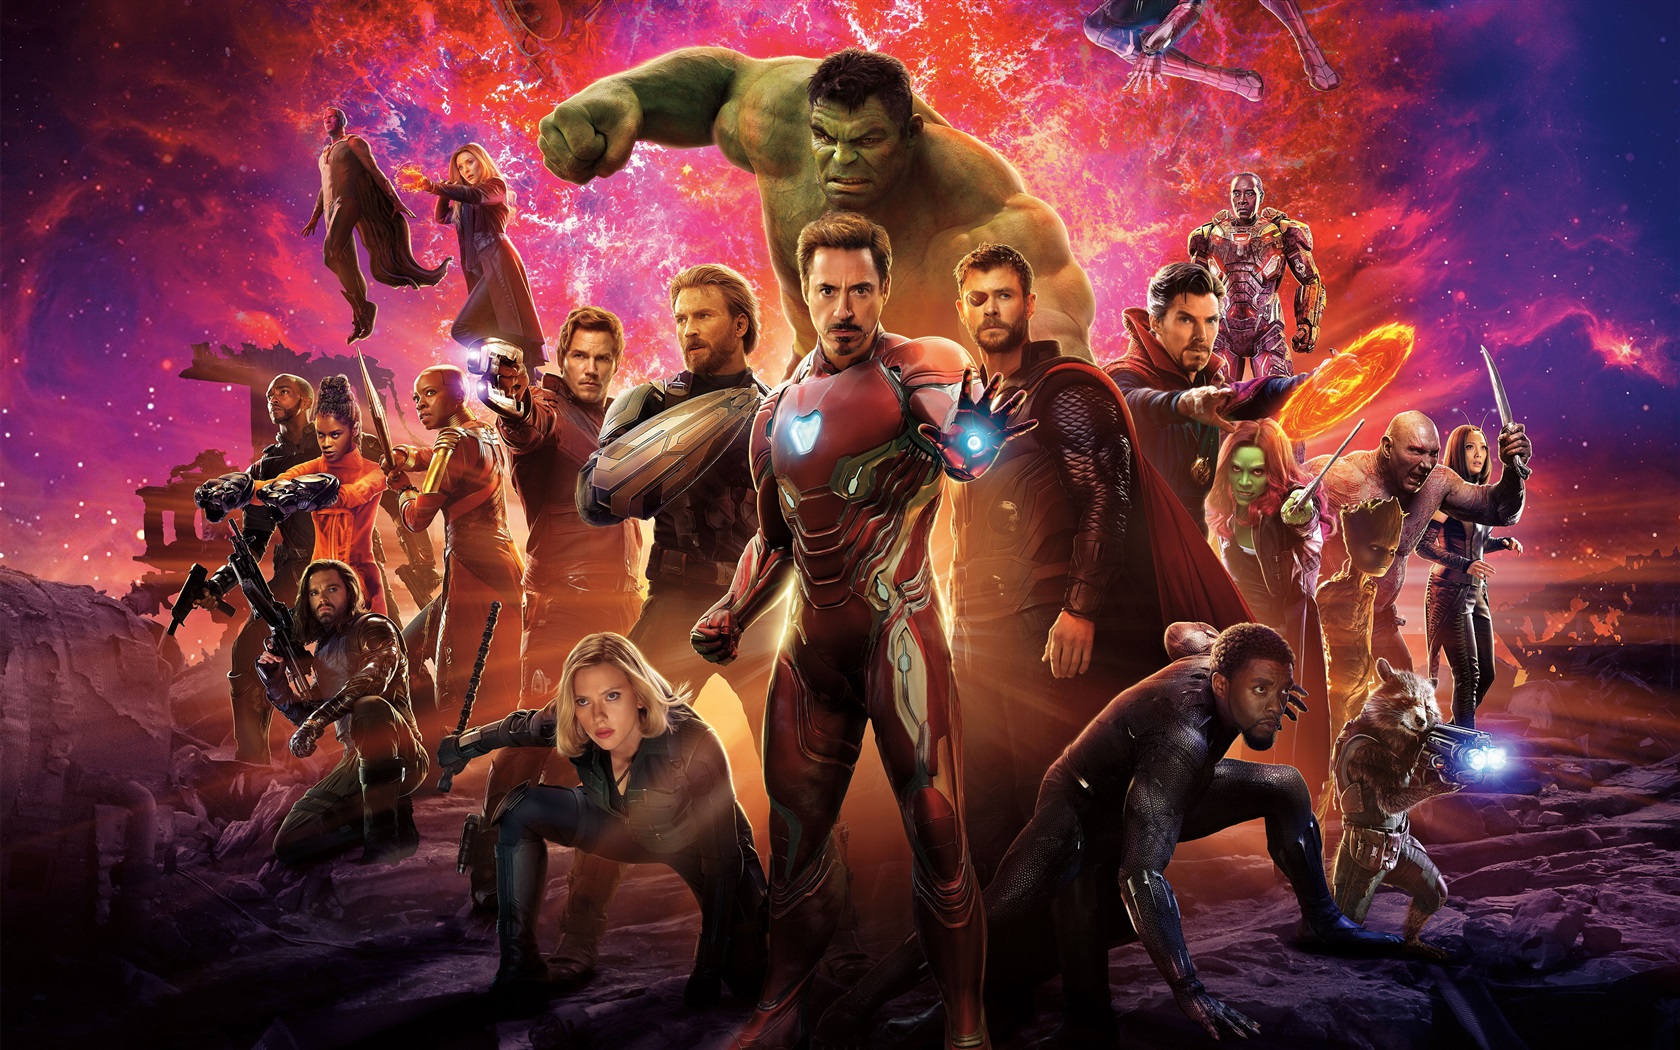 Wallpaper Avengers 3: Infinity War, Marvel movie 2018 3840x2160 UHD 4K Picture, Image